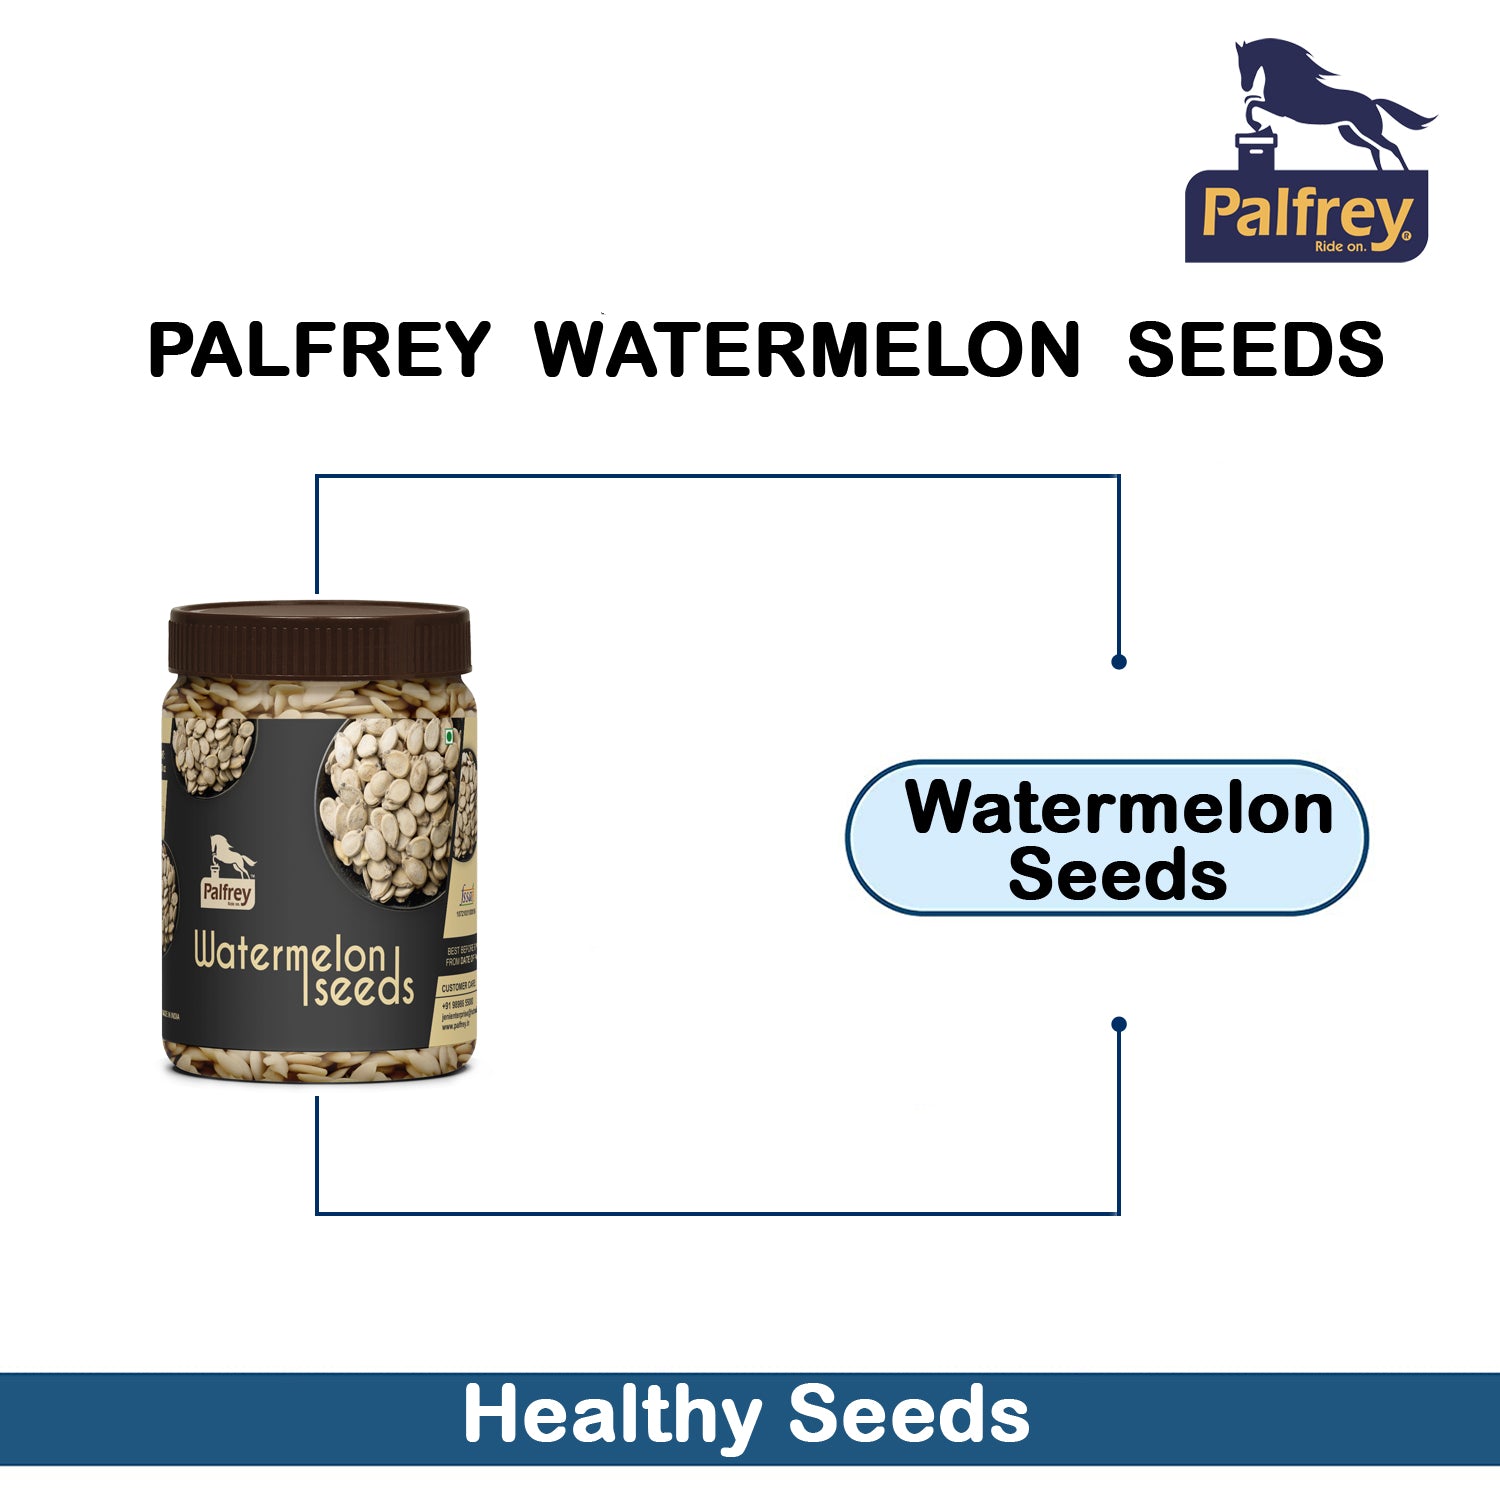 Palfrey Watermelon Seed 400g